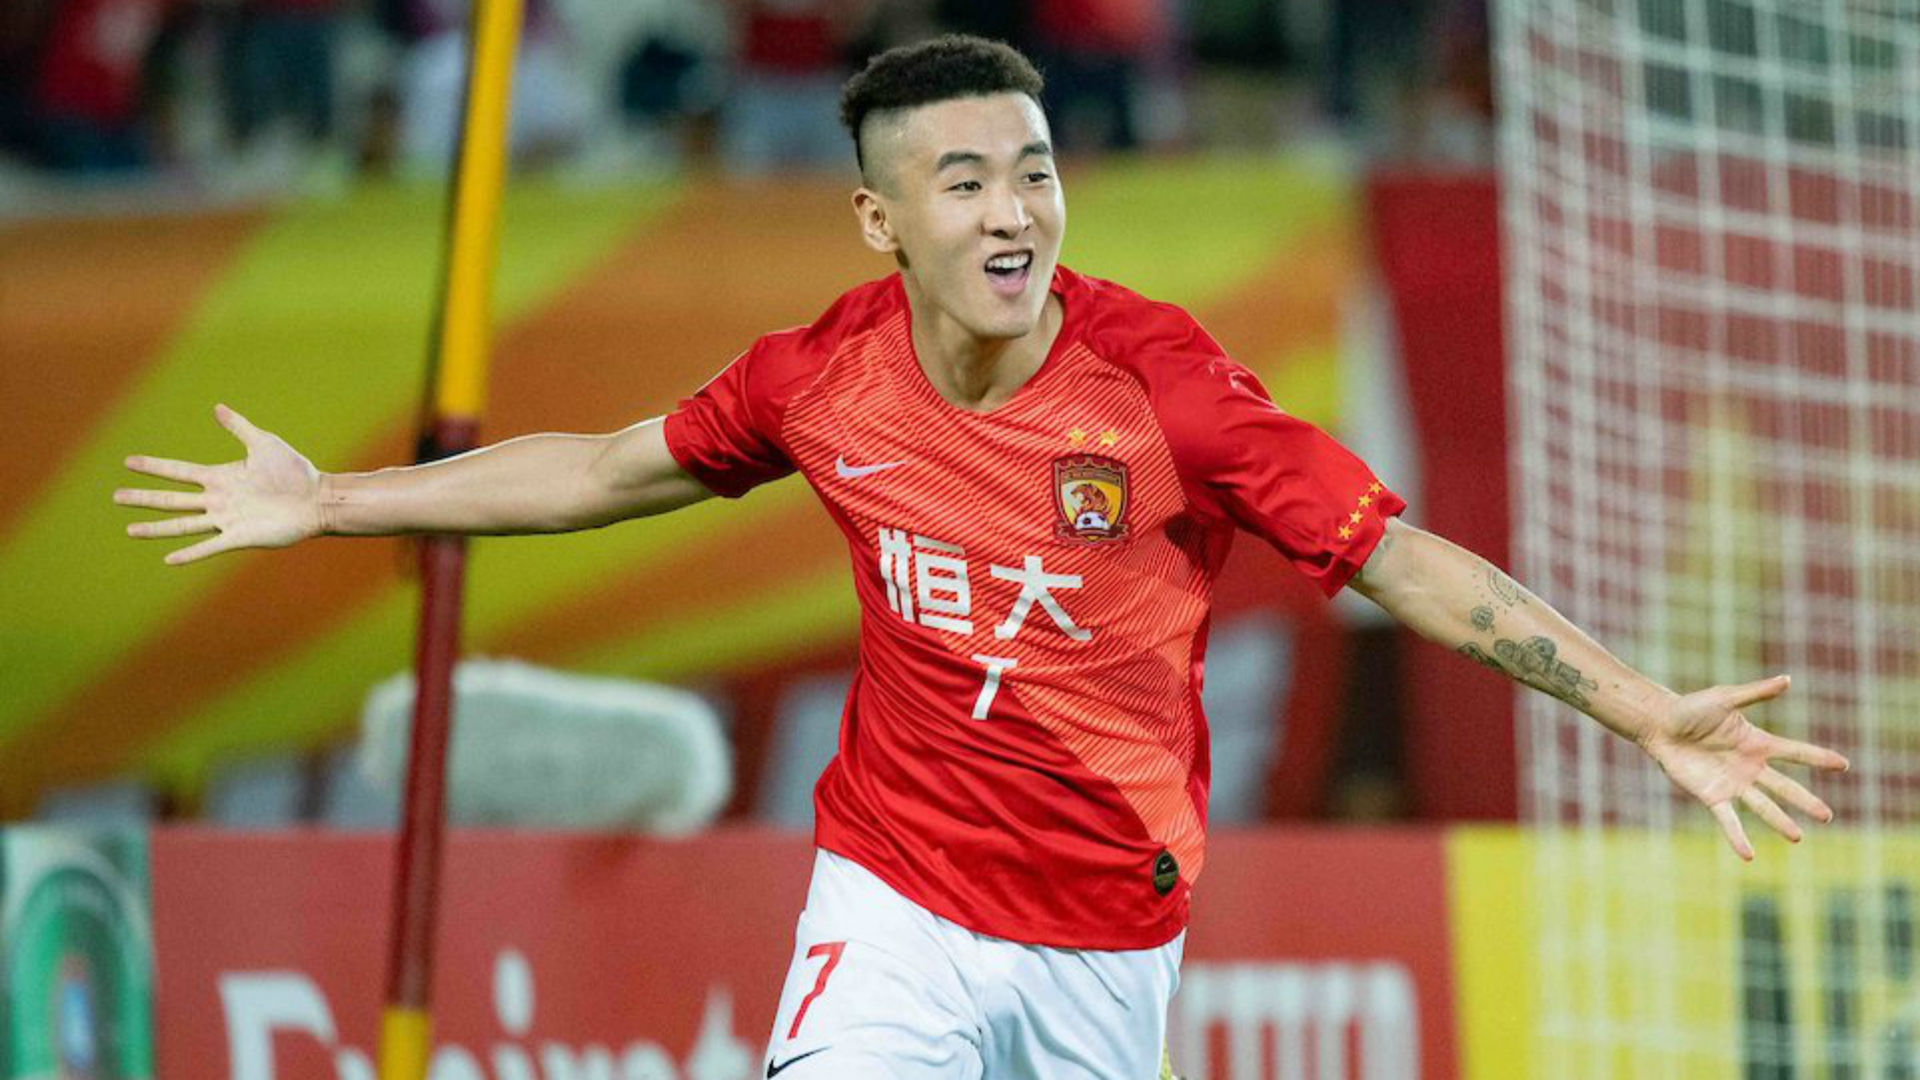 A fortuitous late goal saw Guangzhou Evergrande earn a 2-1 win over Shandong Luneng, while Kashima Antlers beat Sanfrecce Hiroshima.